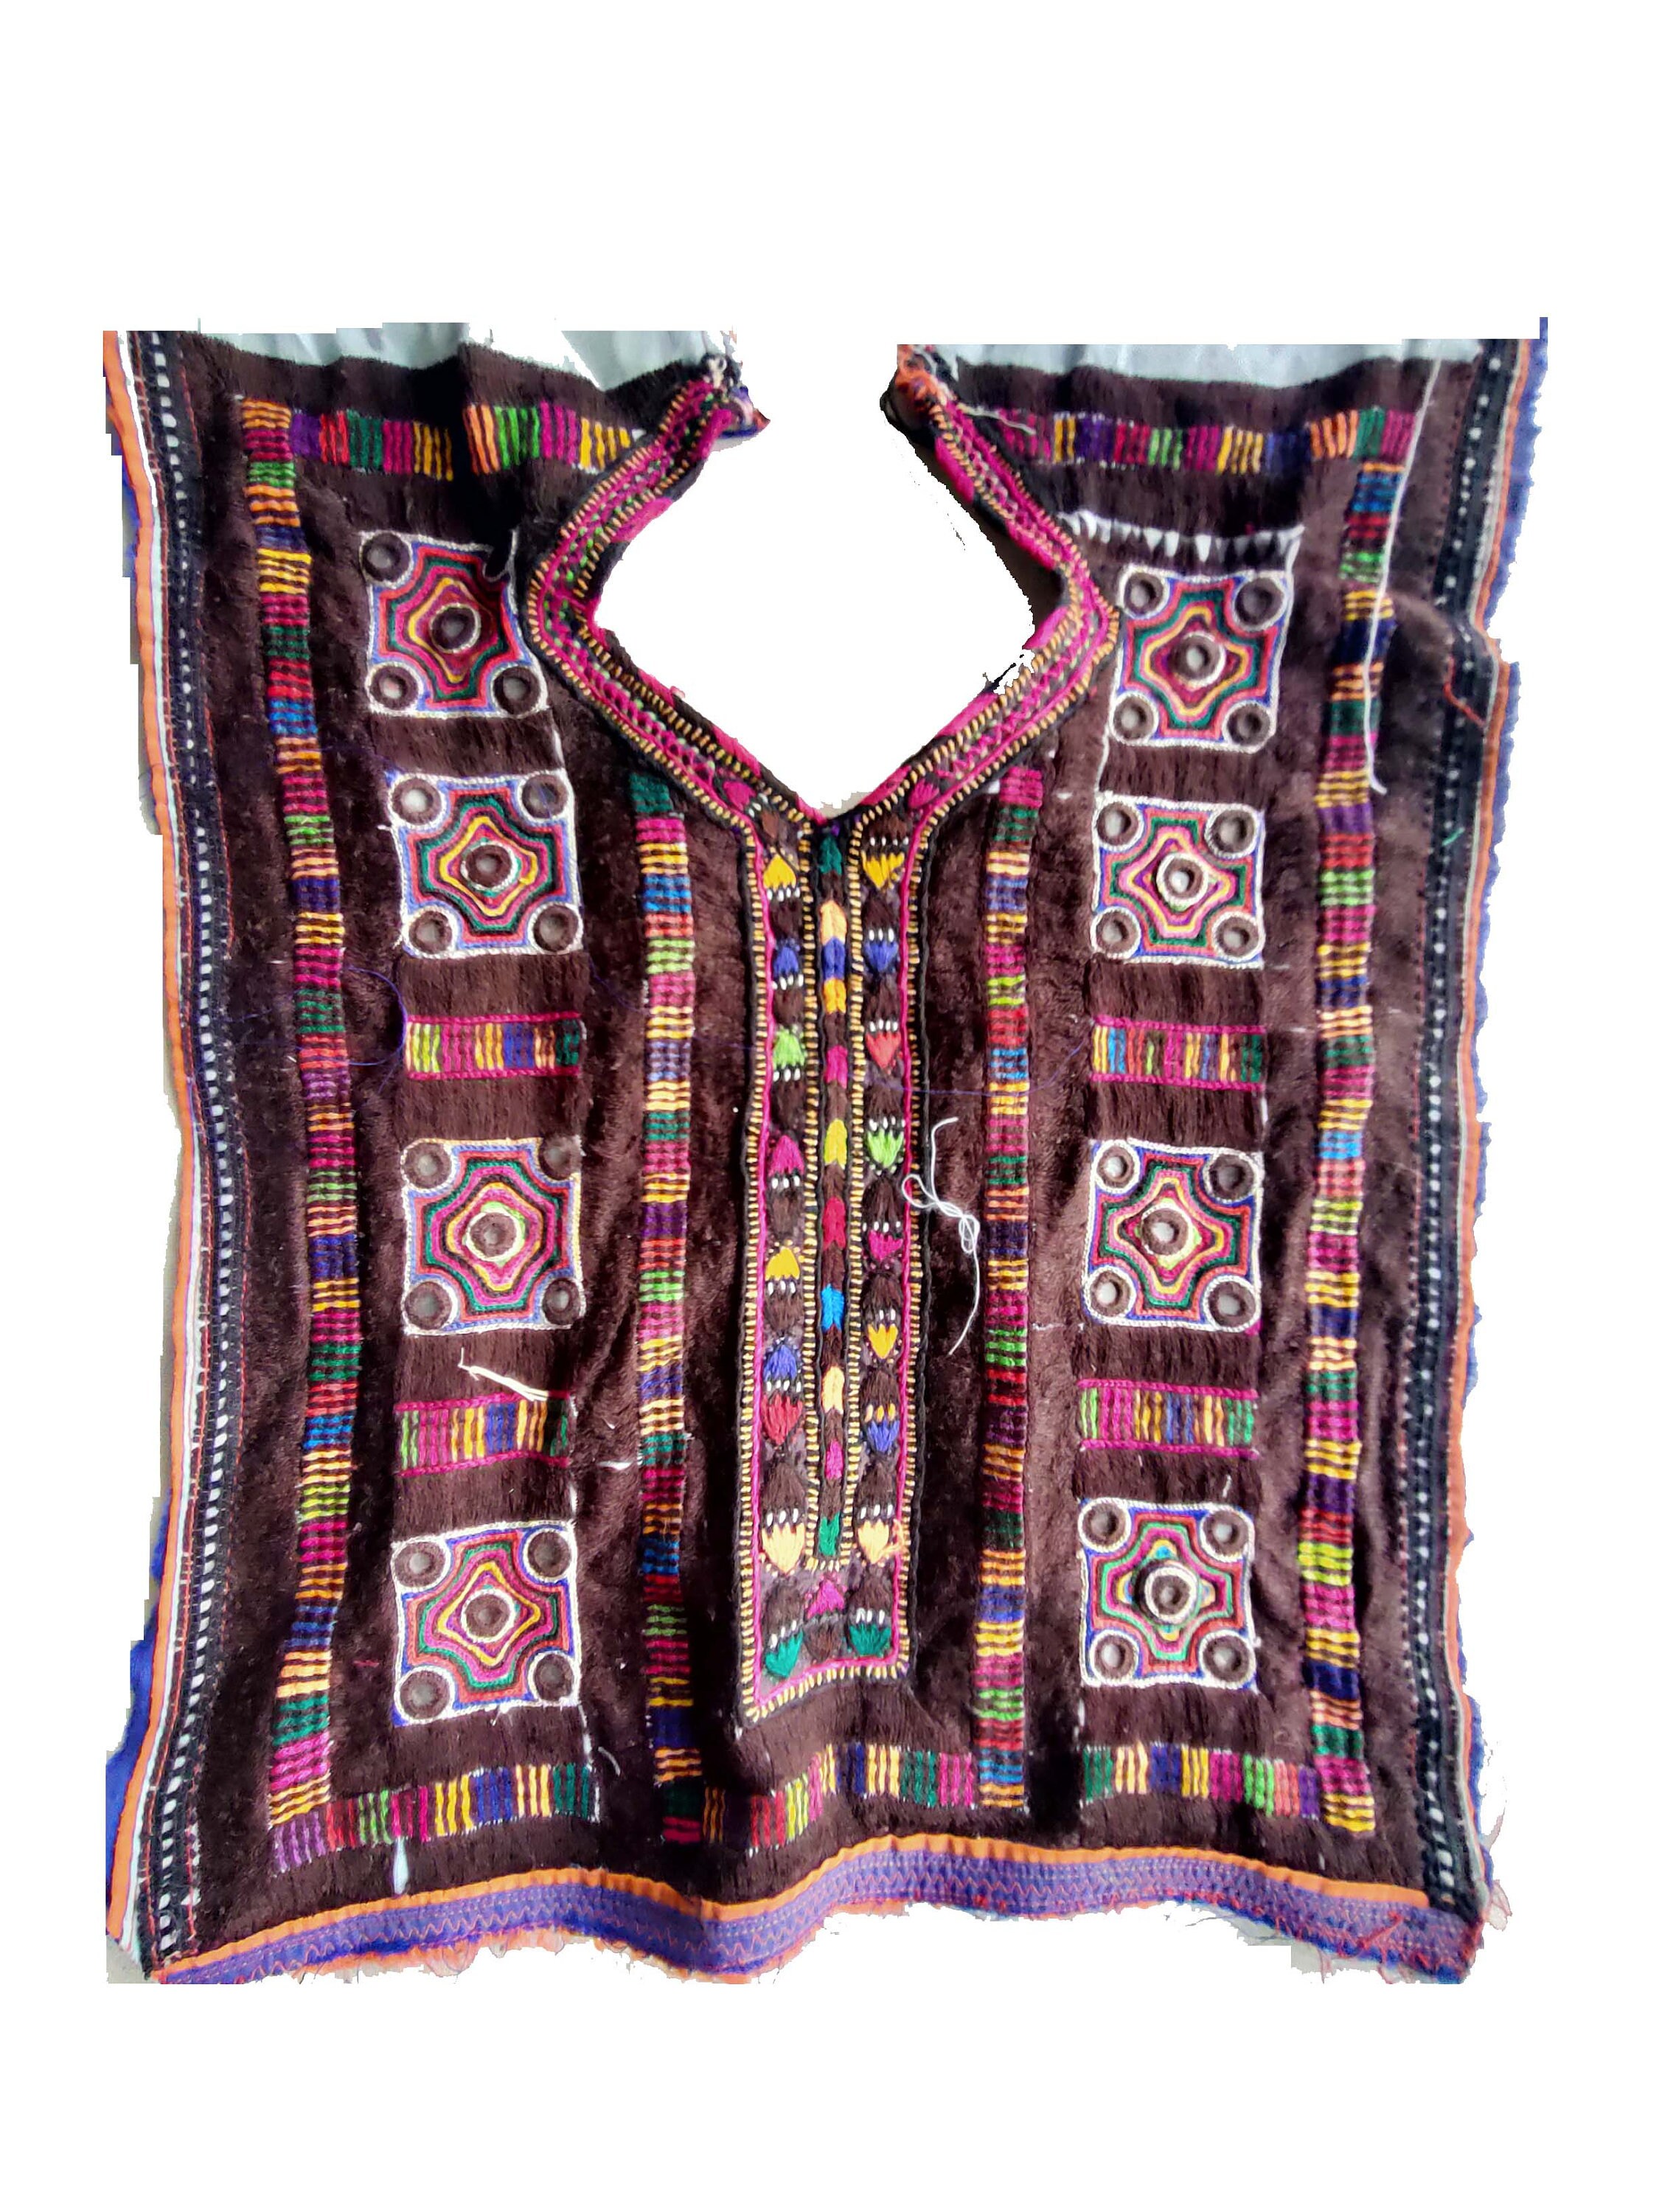 Upcycled Recycled Kutchi Sindhi Afghan Tribal Embroidery Applique Vintage Boho Banjara Yoke Neckline,Handmade Indian Embroidered Neck Patch